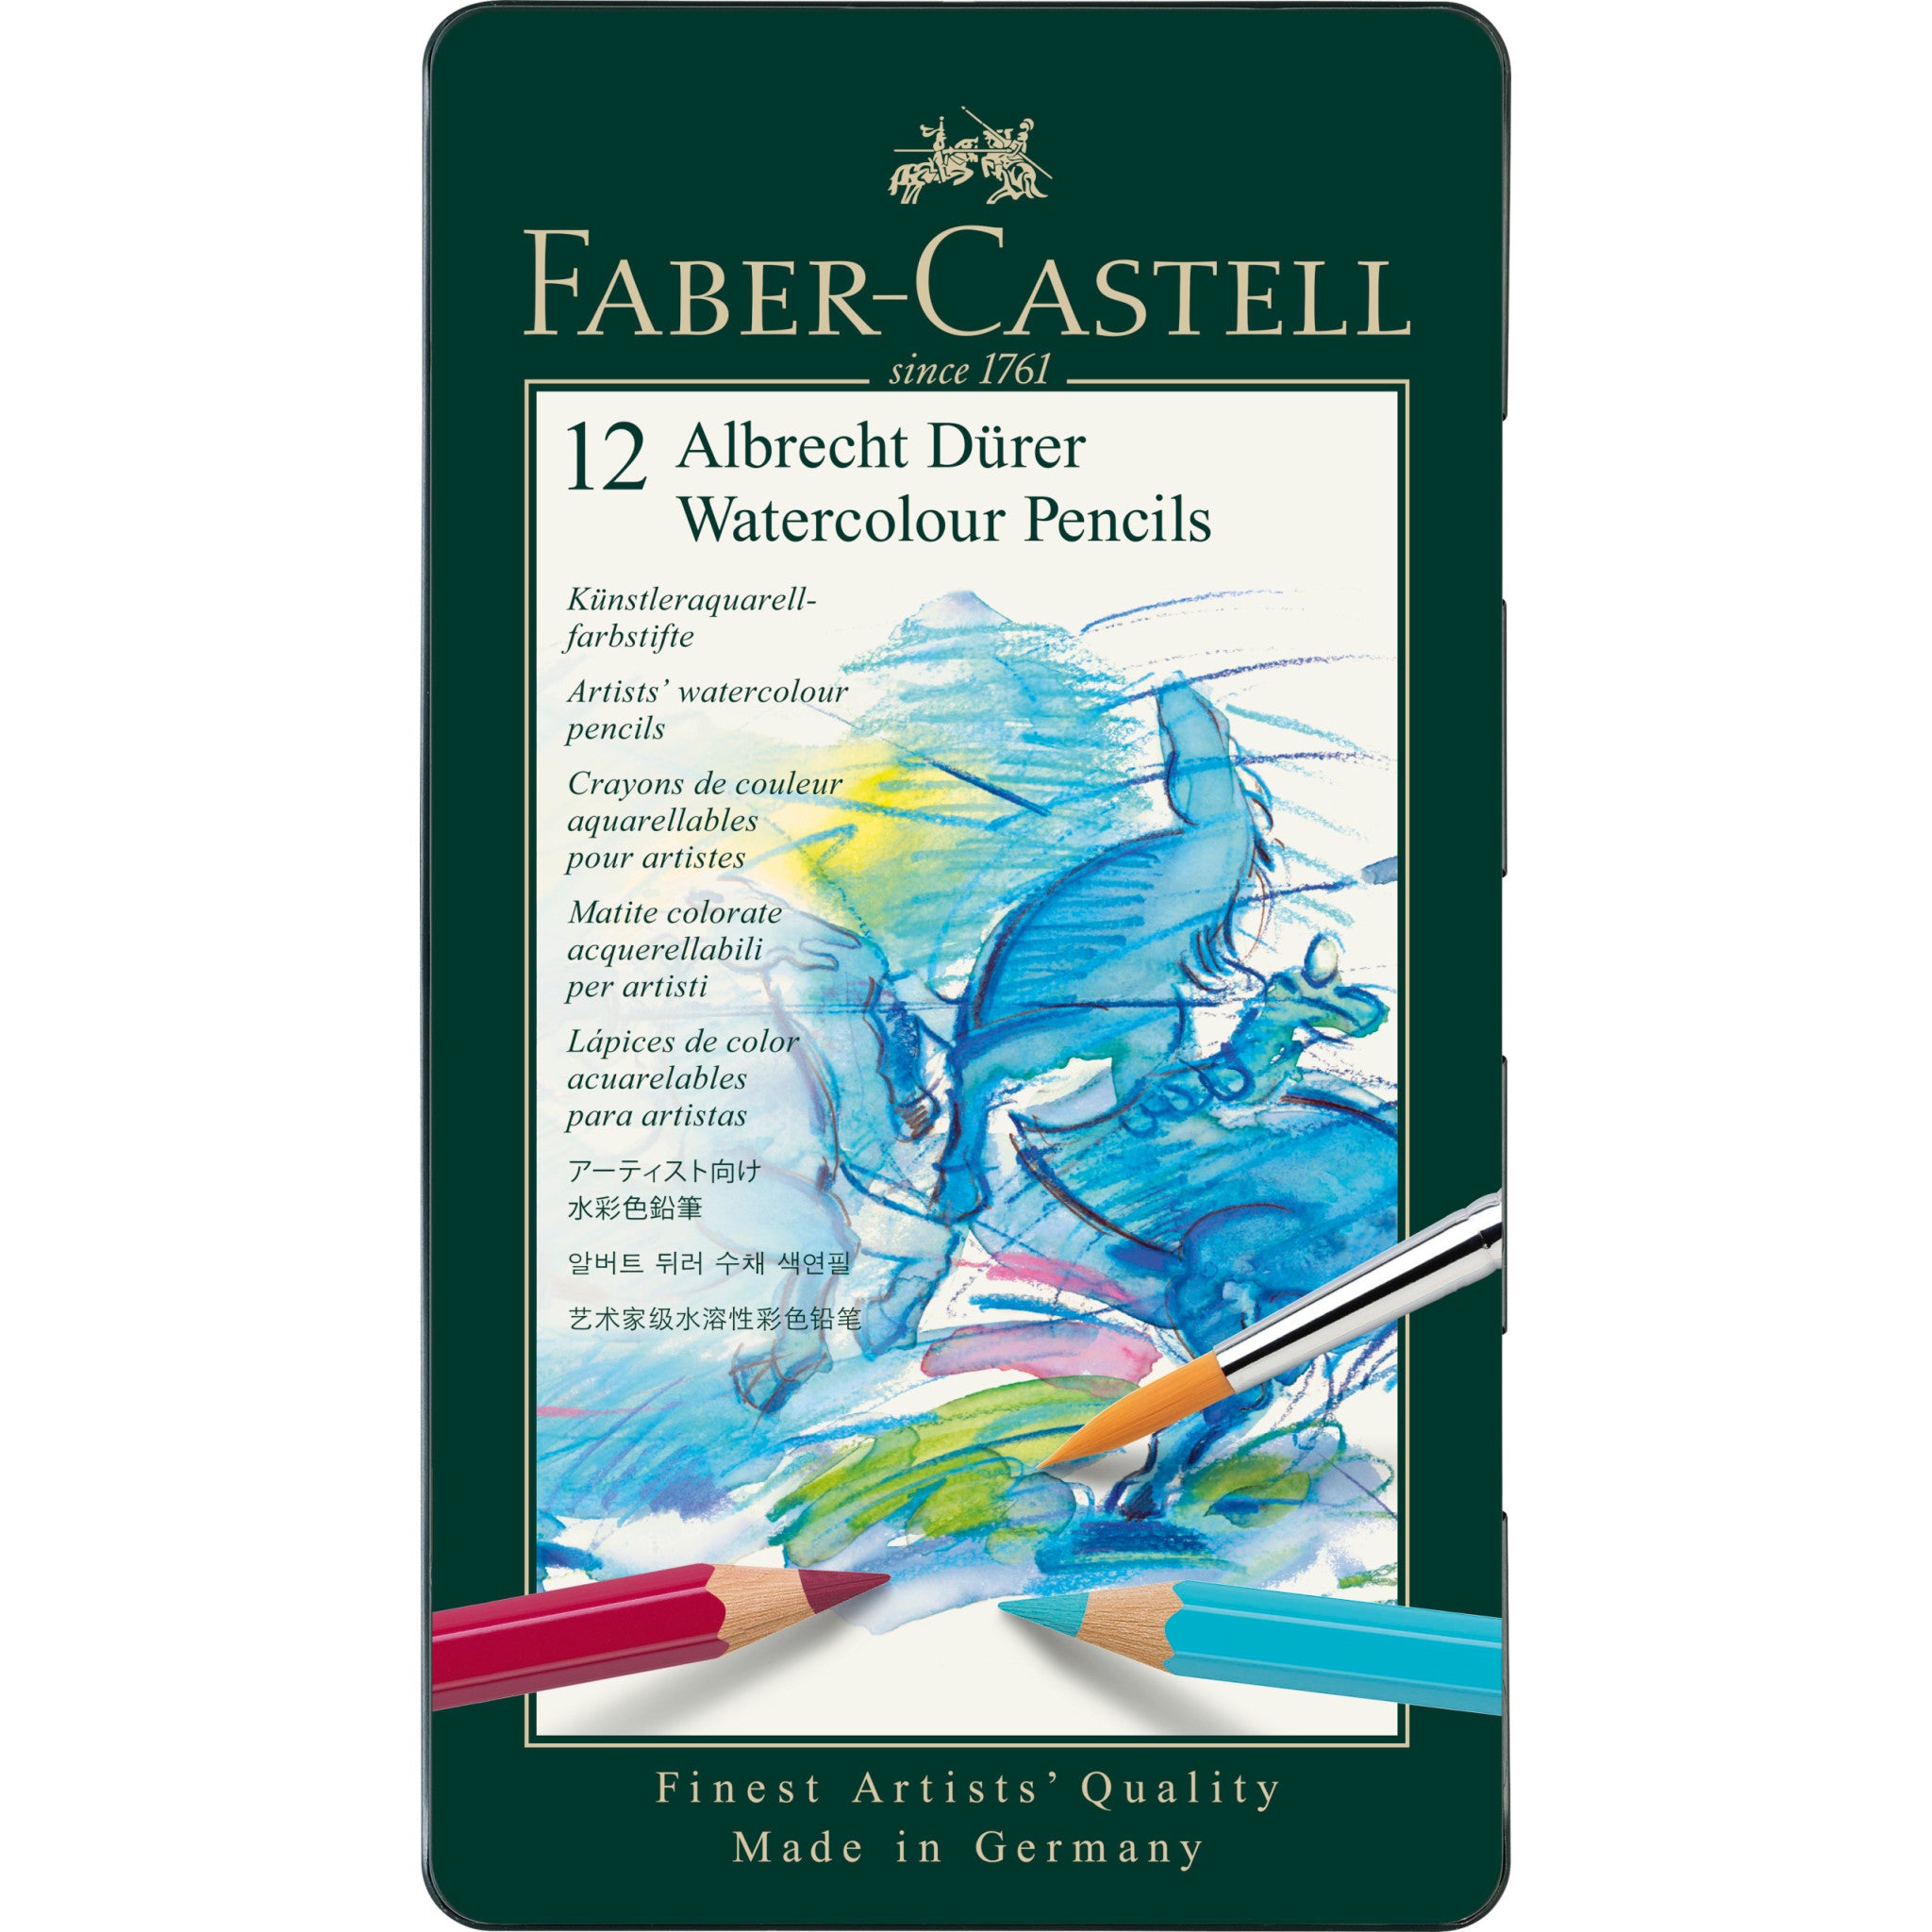 Faber-Castell Art GRIP Aquarelle Watercolor Pencil Set, Tin of 12 Pencils